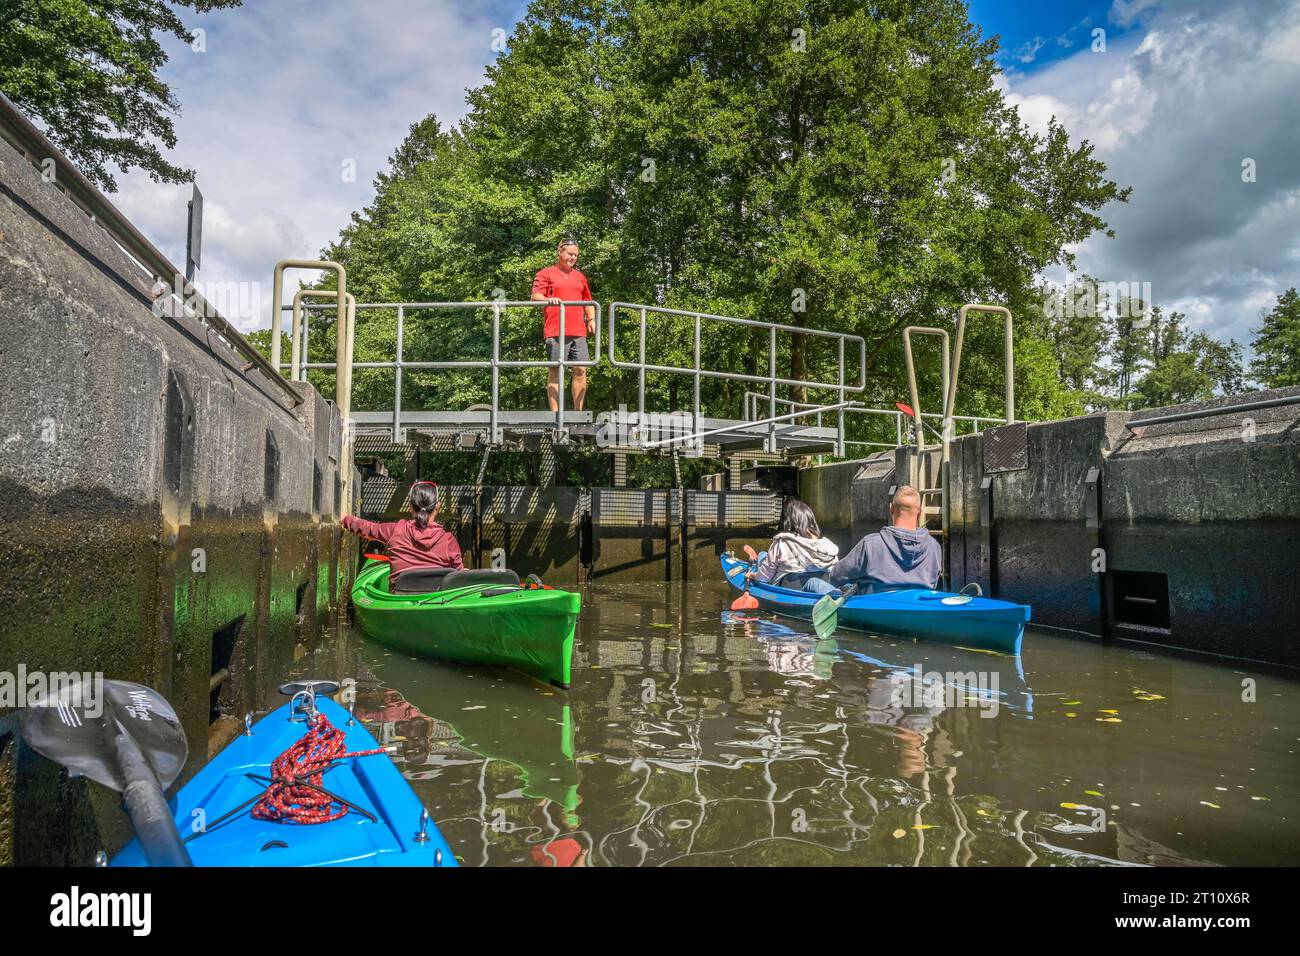 Boote, Schleuse Eiche, Spreewald, Brandenburg, Deutschland *** Boats, lock oak, Spreewald, Brandenburg, Germany Credit: Imago/Alamy Live News Stock Photo